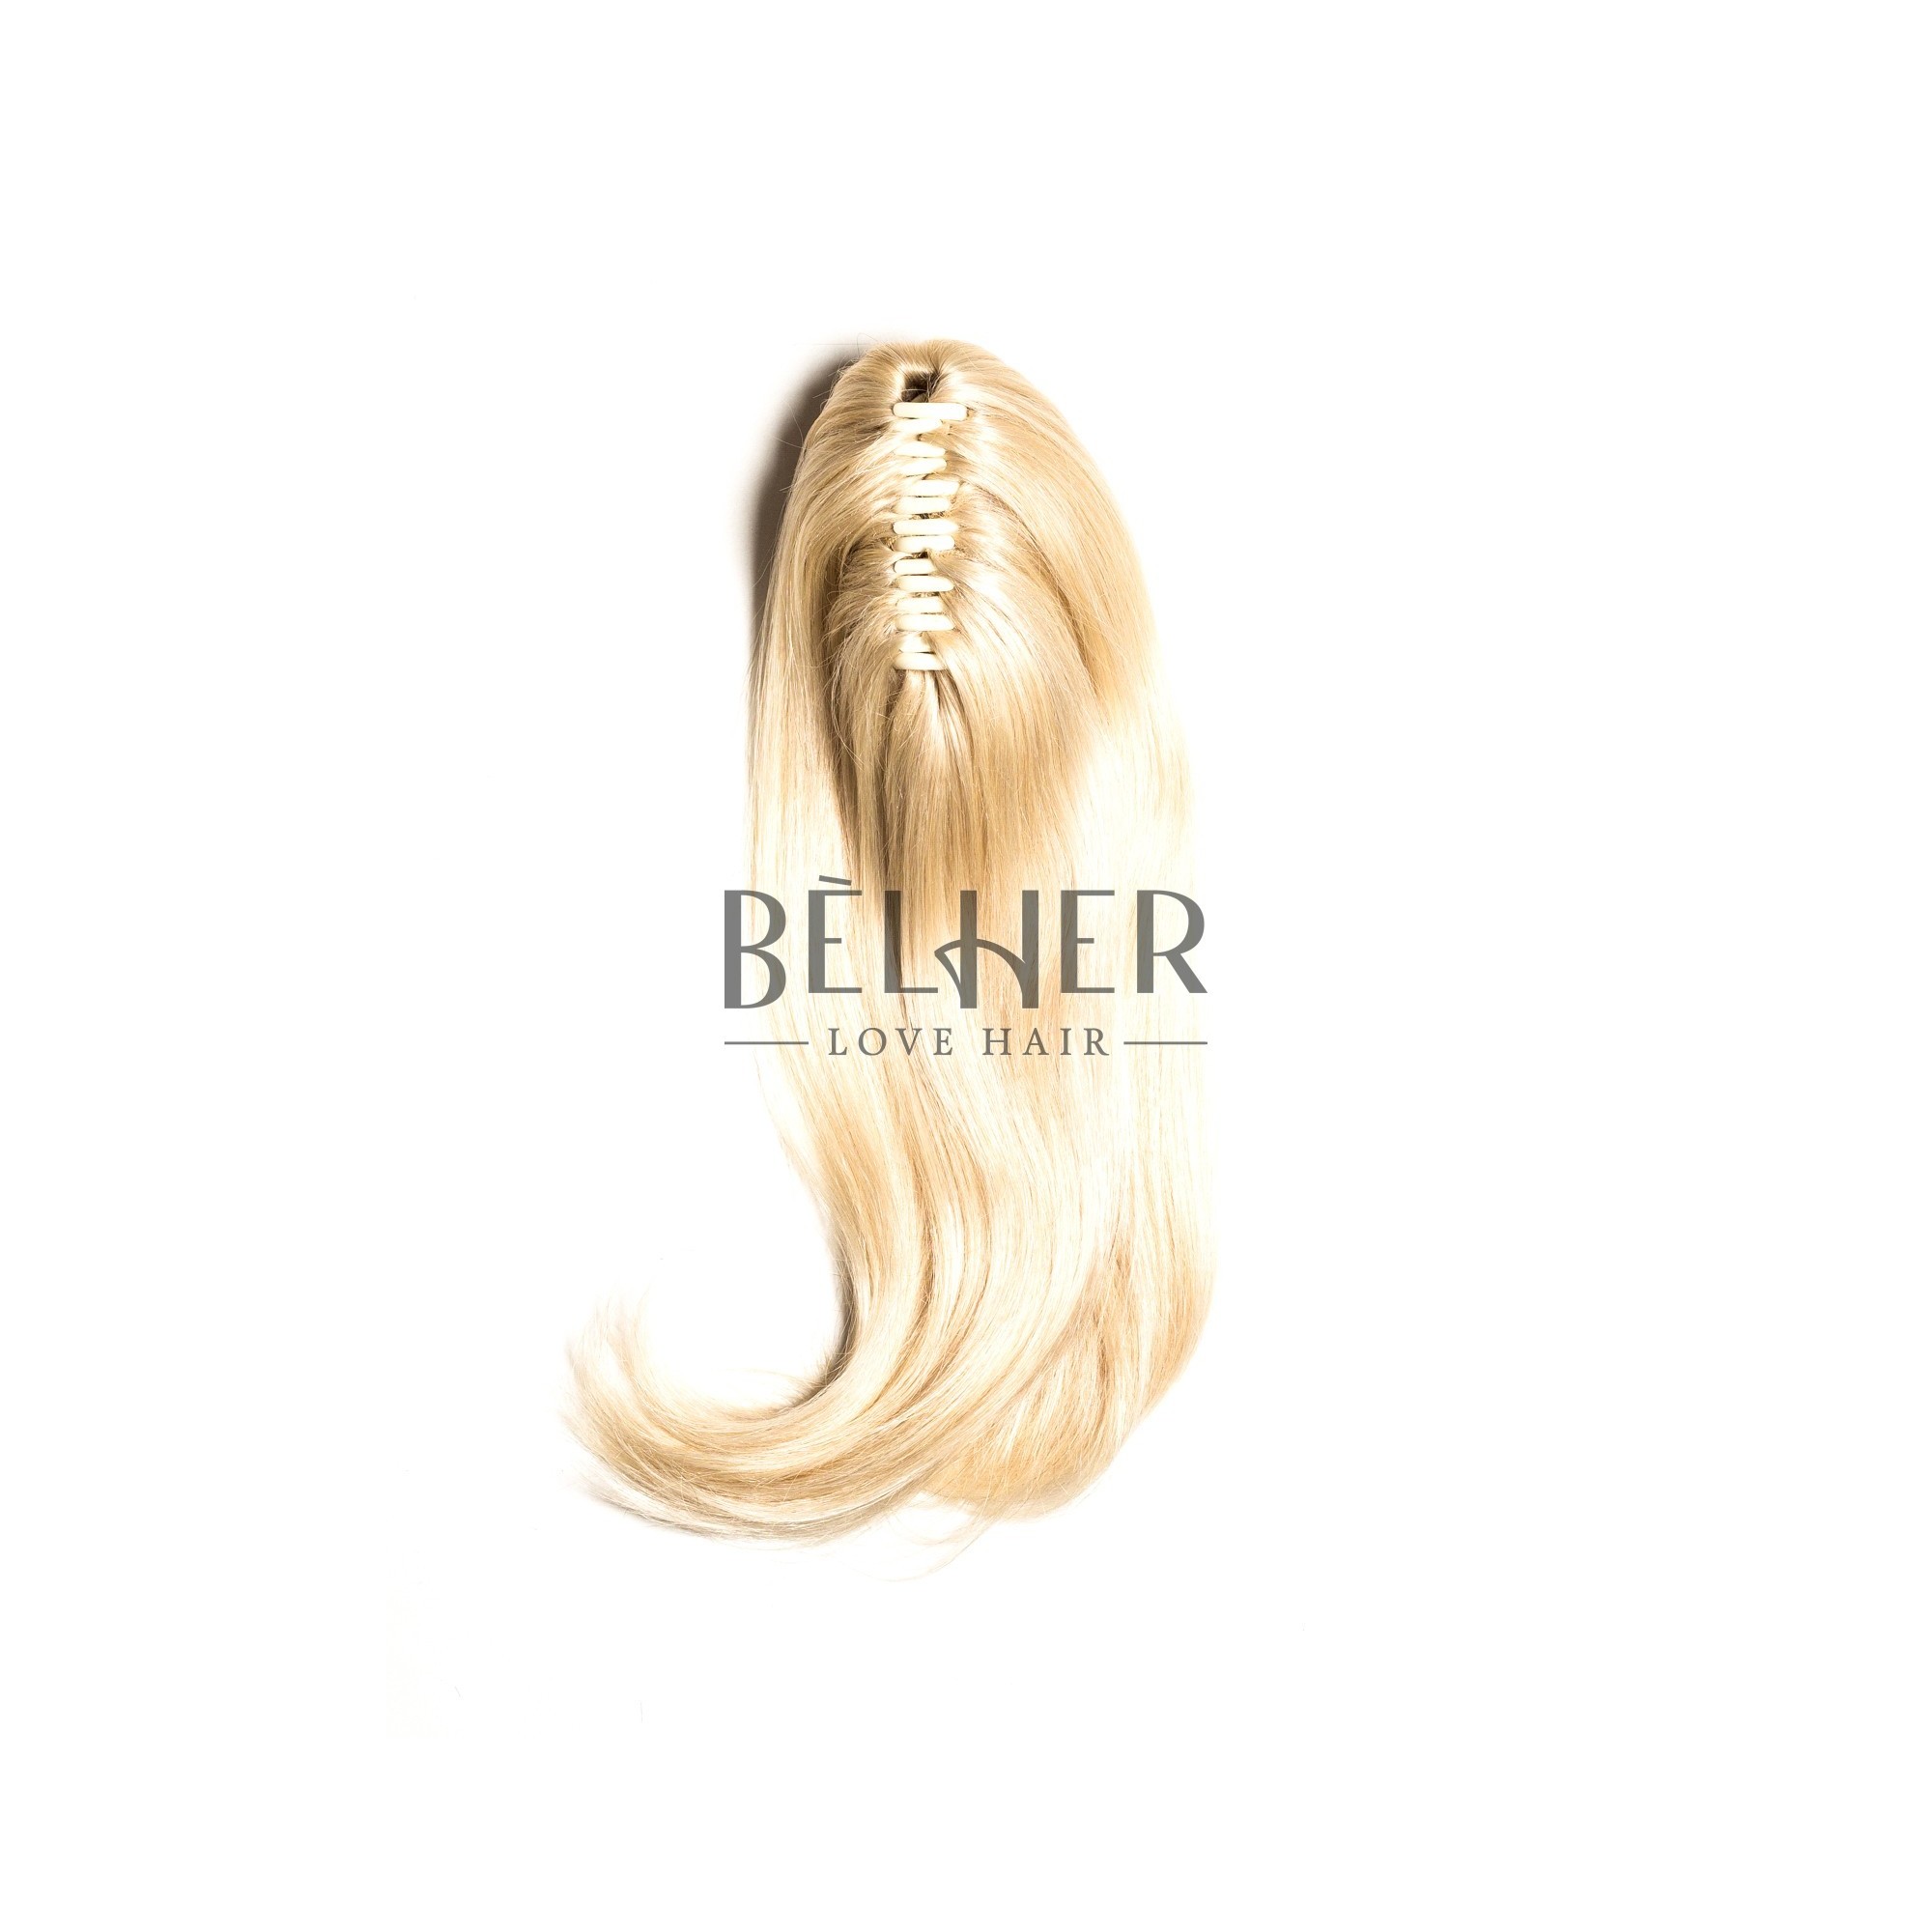 Coada Naturala Cu Cleste Blond Platinat imagine produs